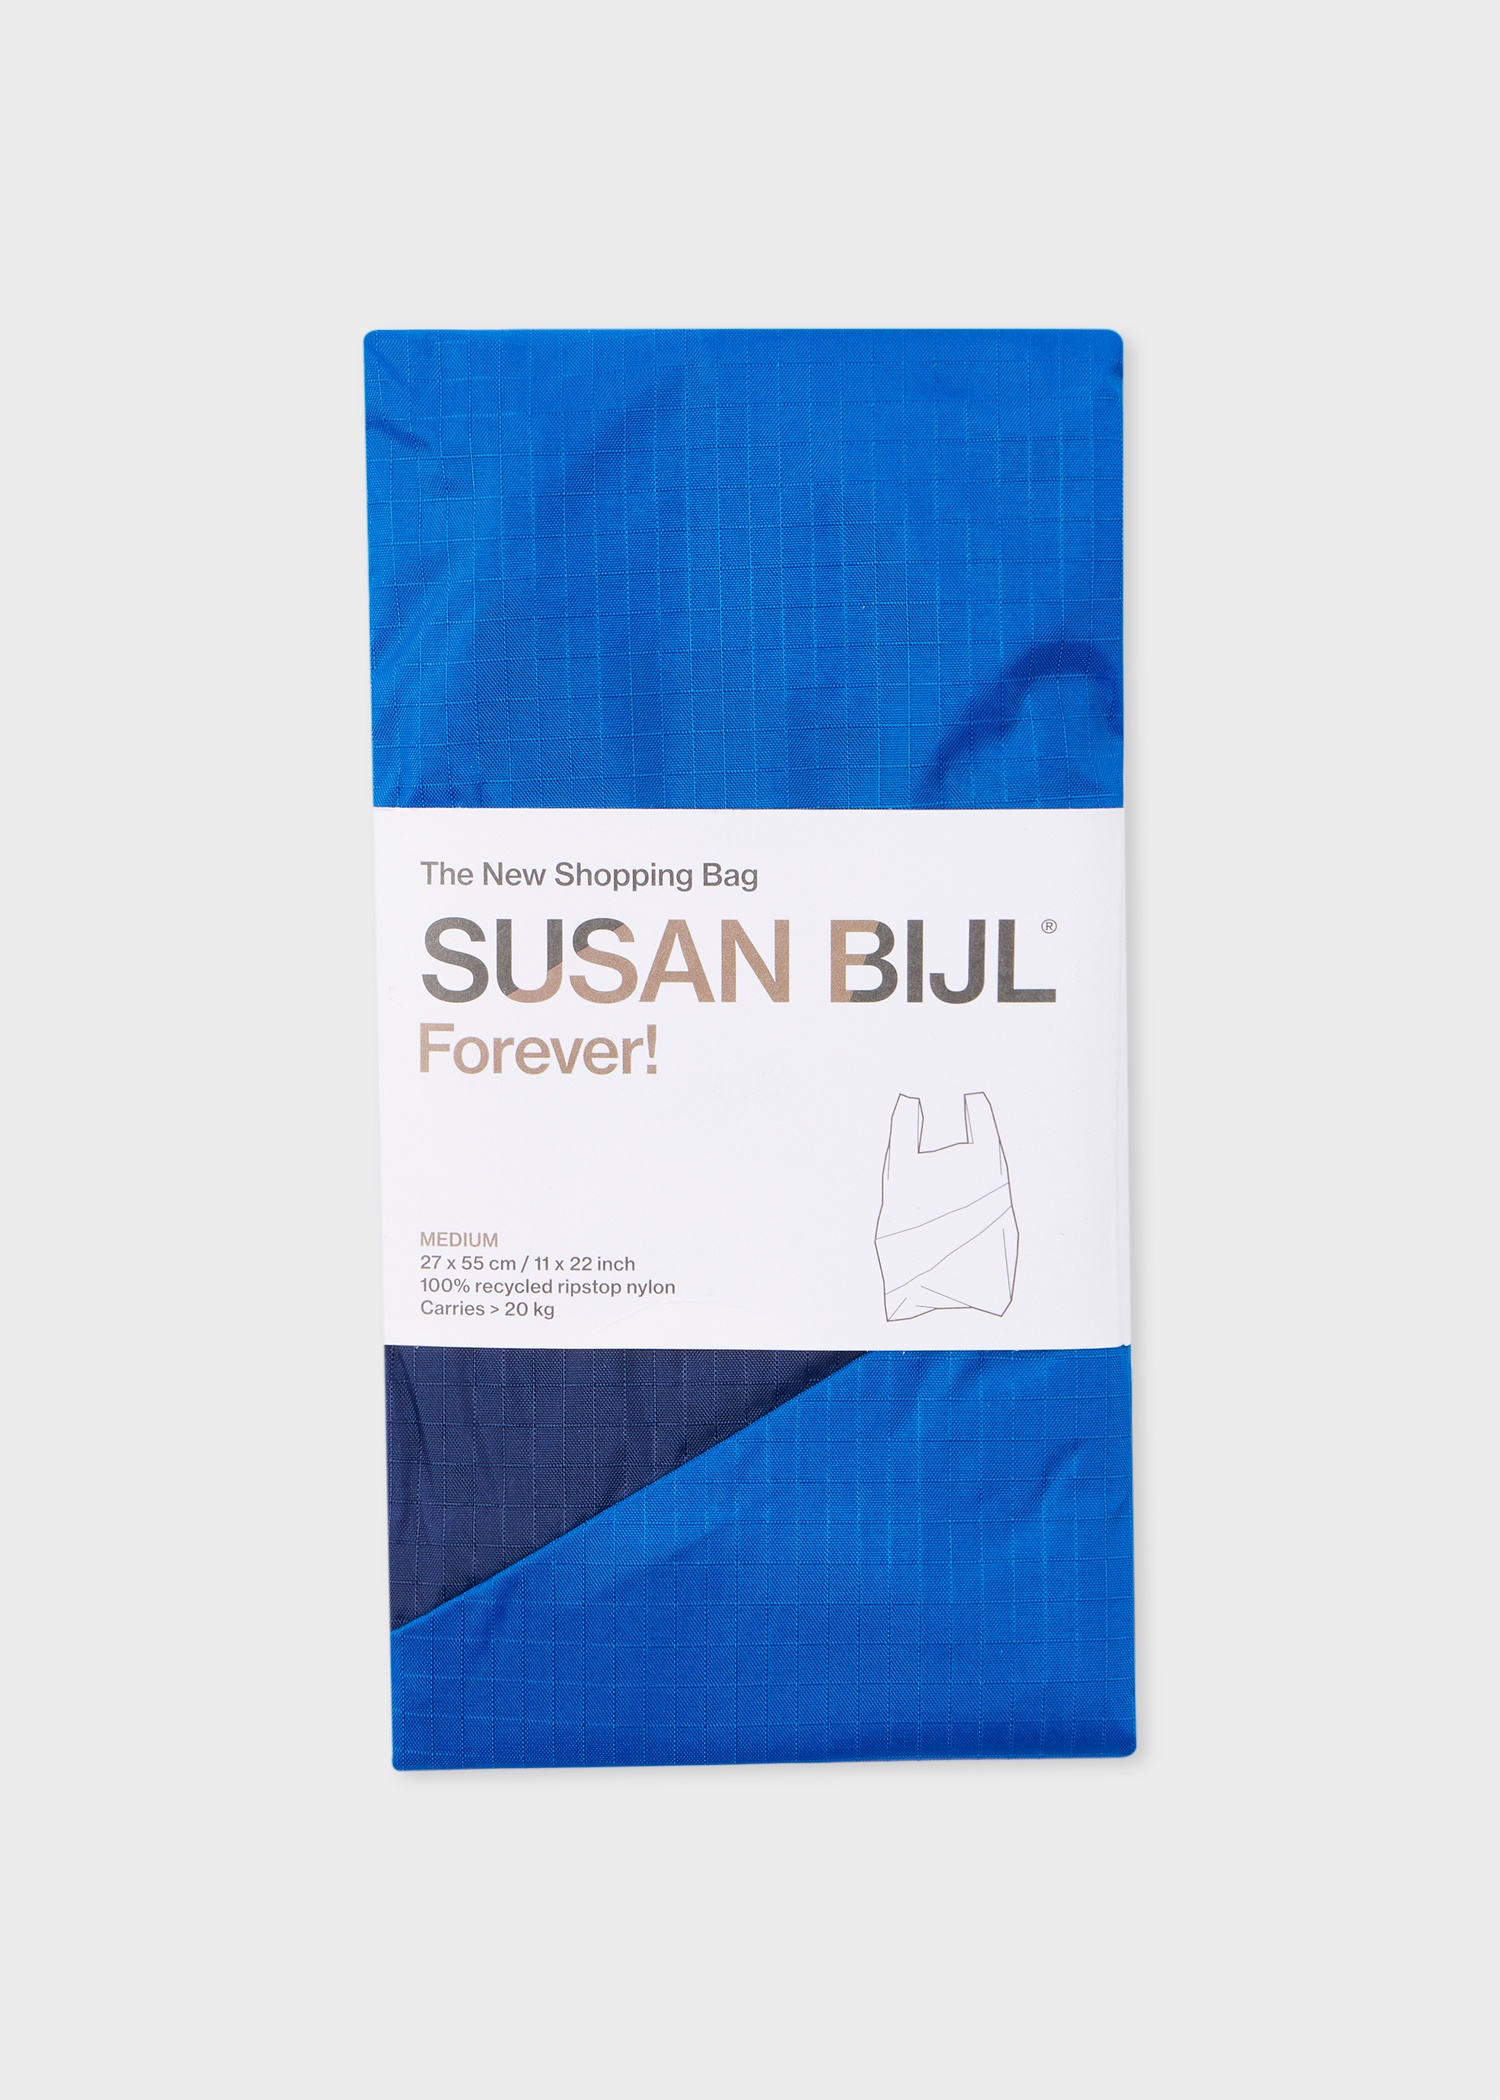 Blue & Navy 'The New Shopping Bag' by Susan Bijl - Medium - 3